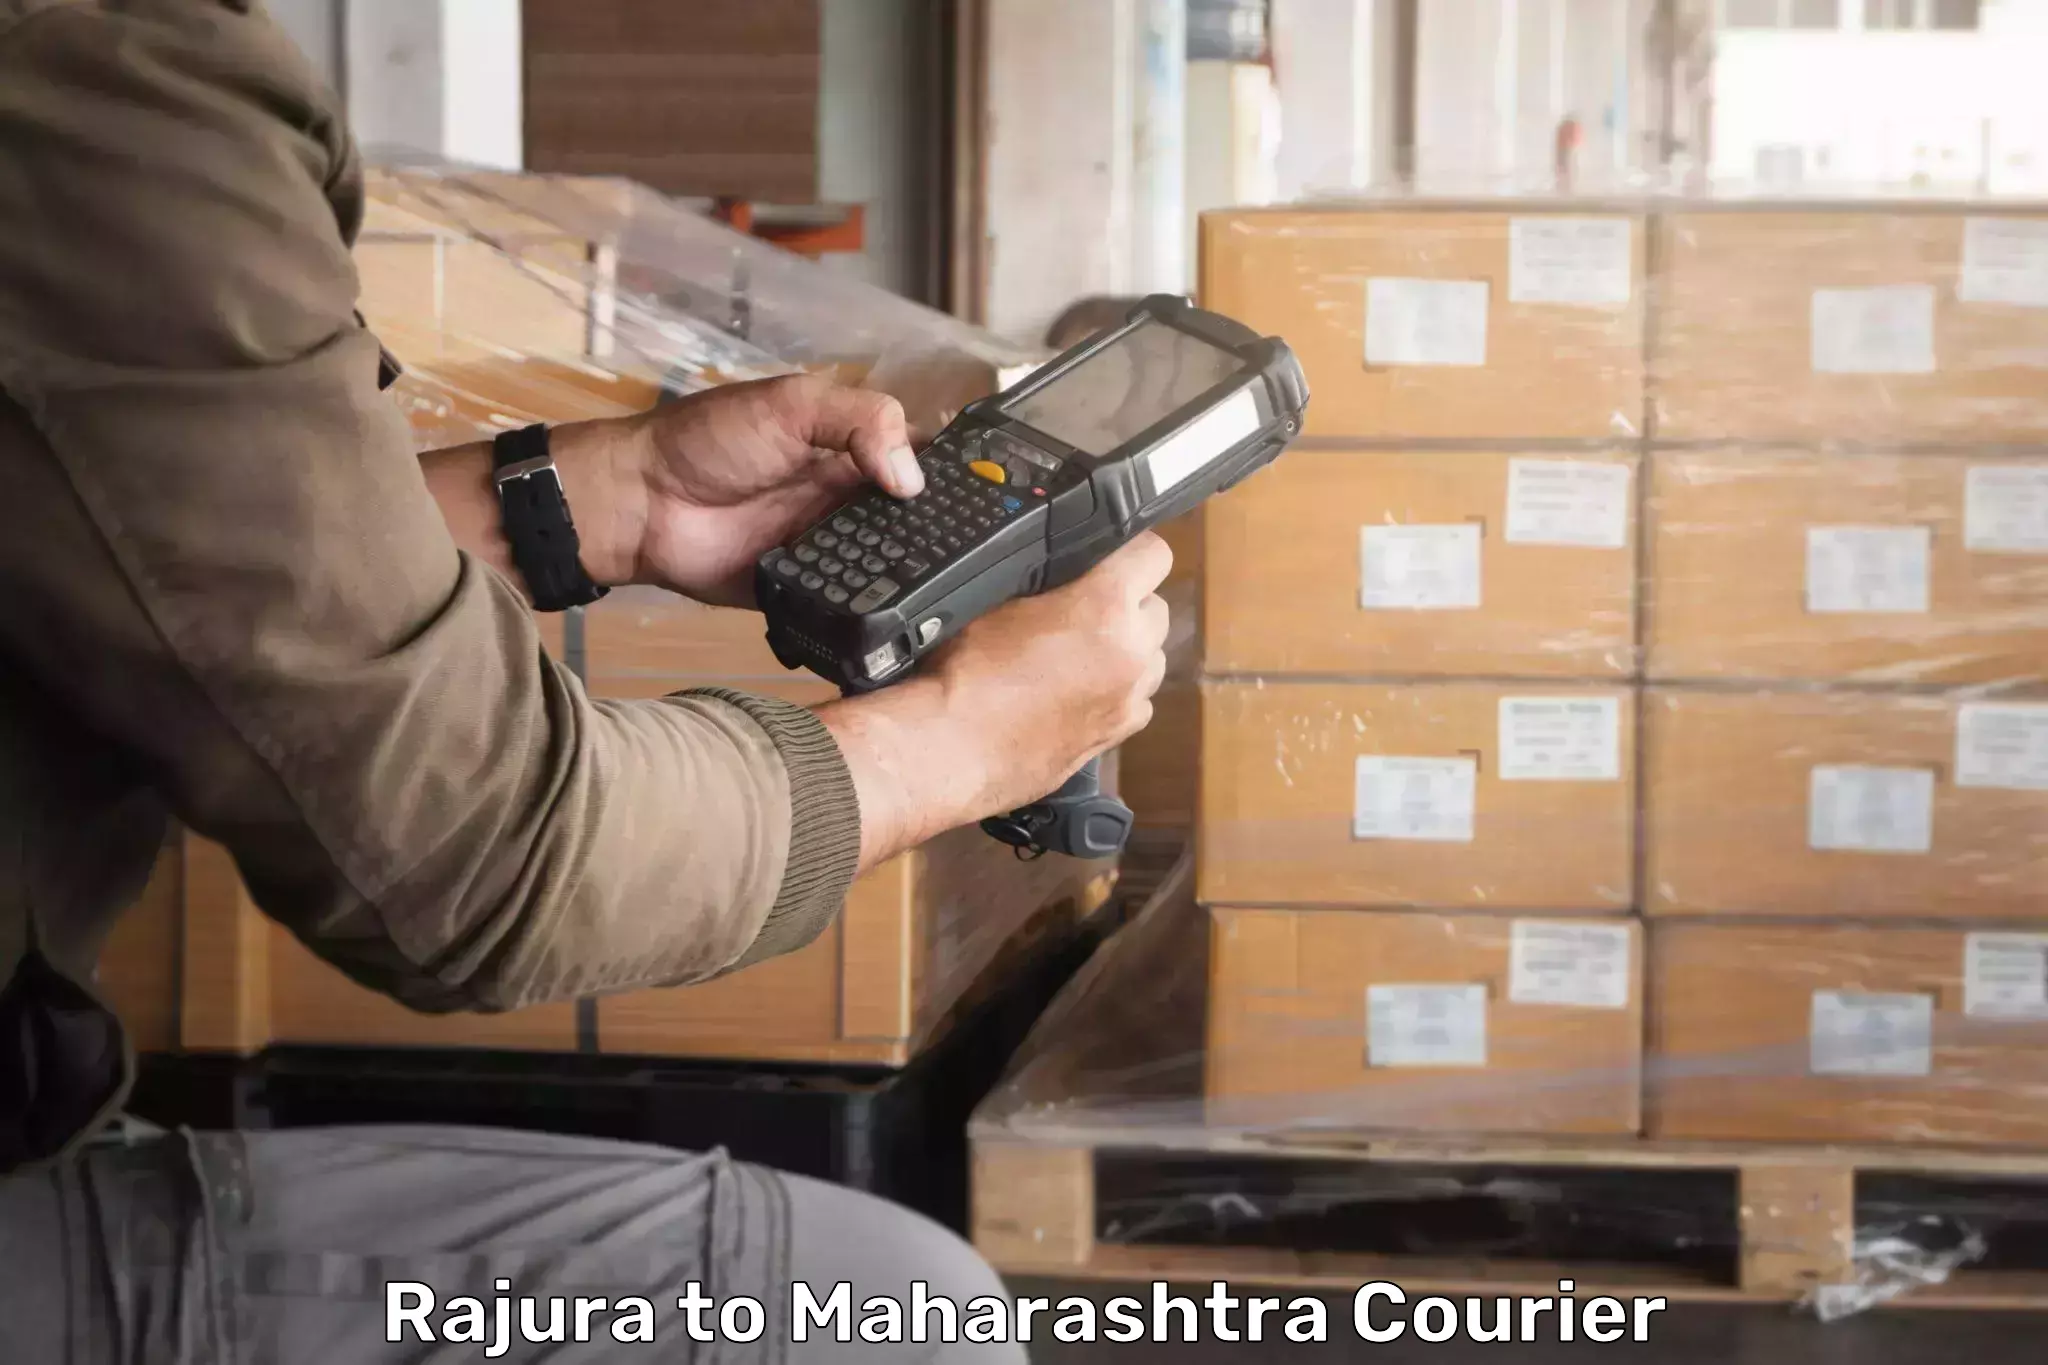 Subscription-based courier Rajura to Aurangabad